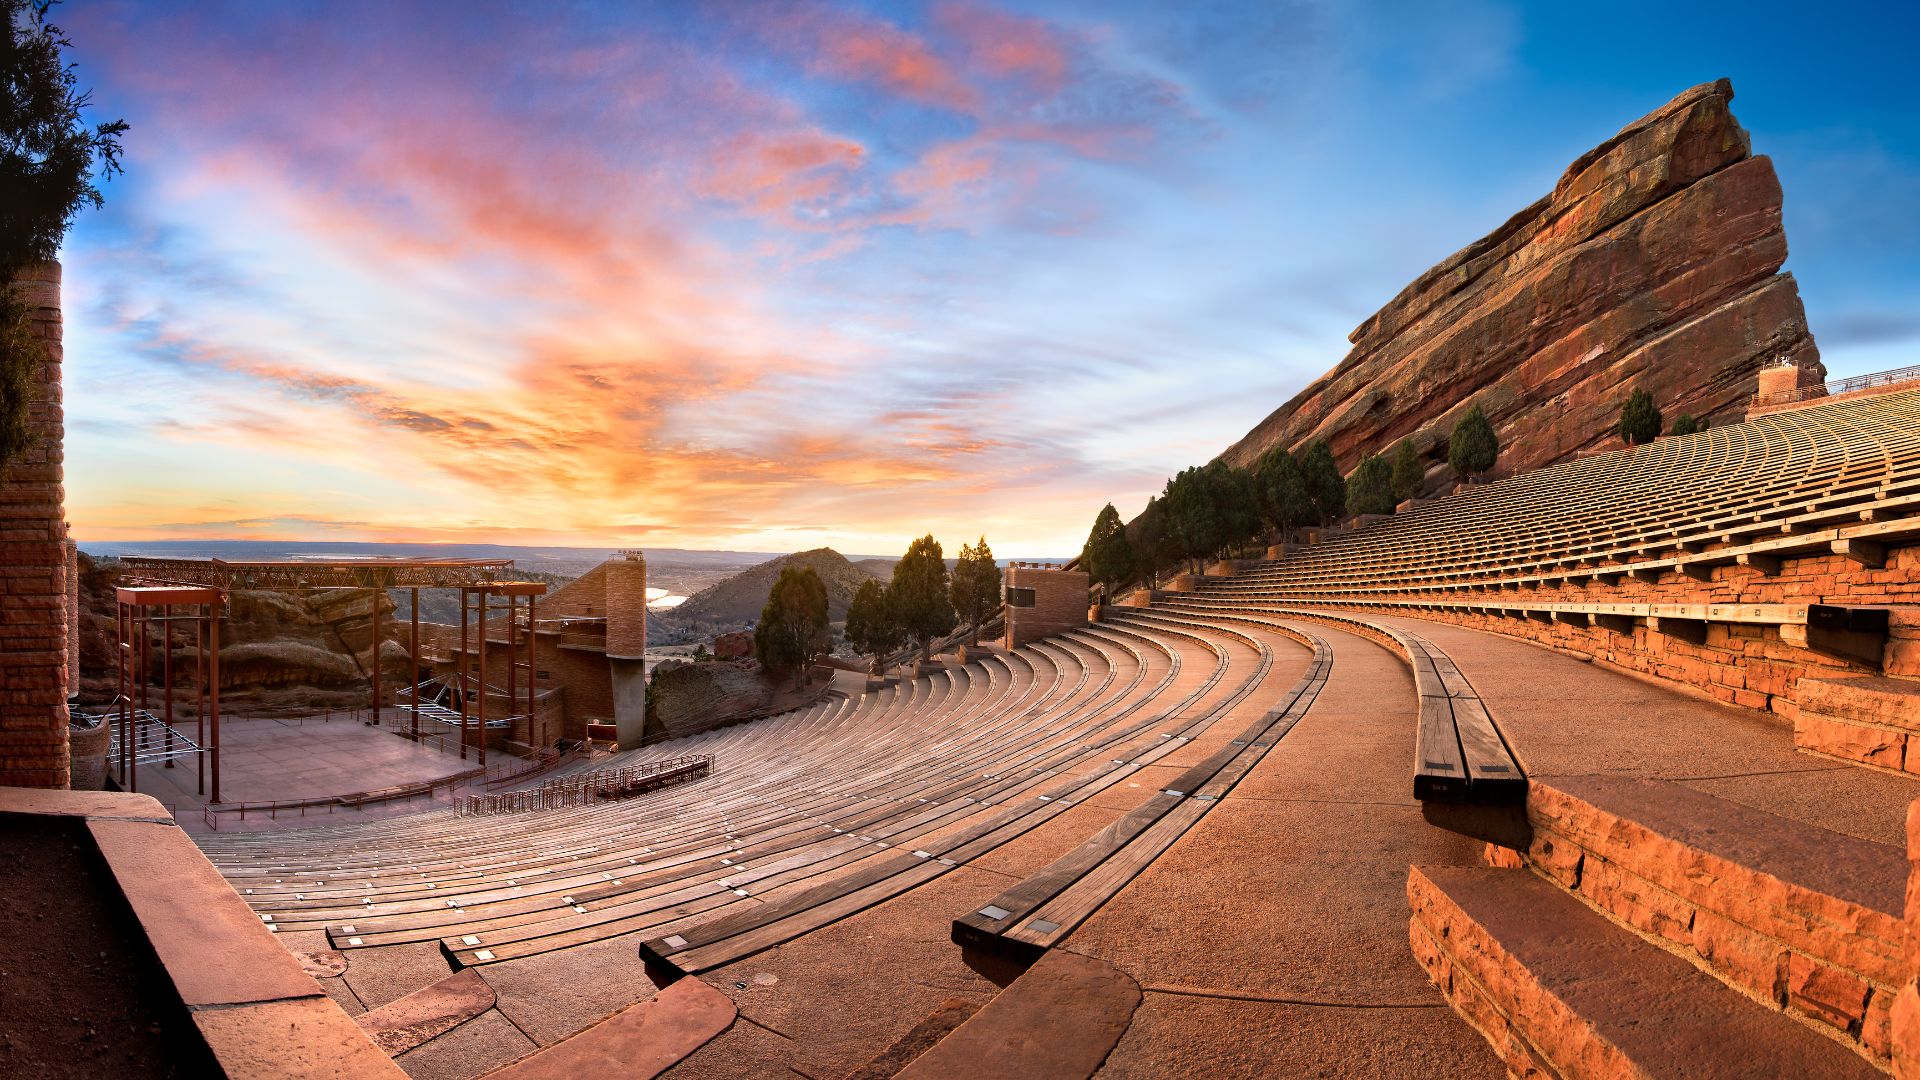 The terraced seats of red rock amphiteater concert venue in Colorado are arrayed under a orange sunset sky